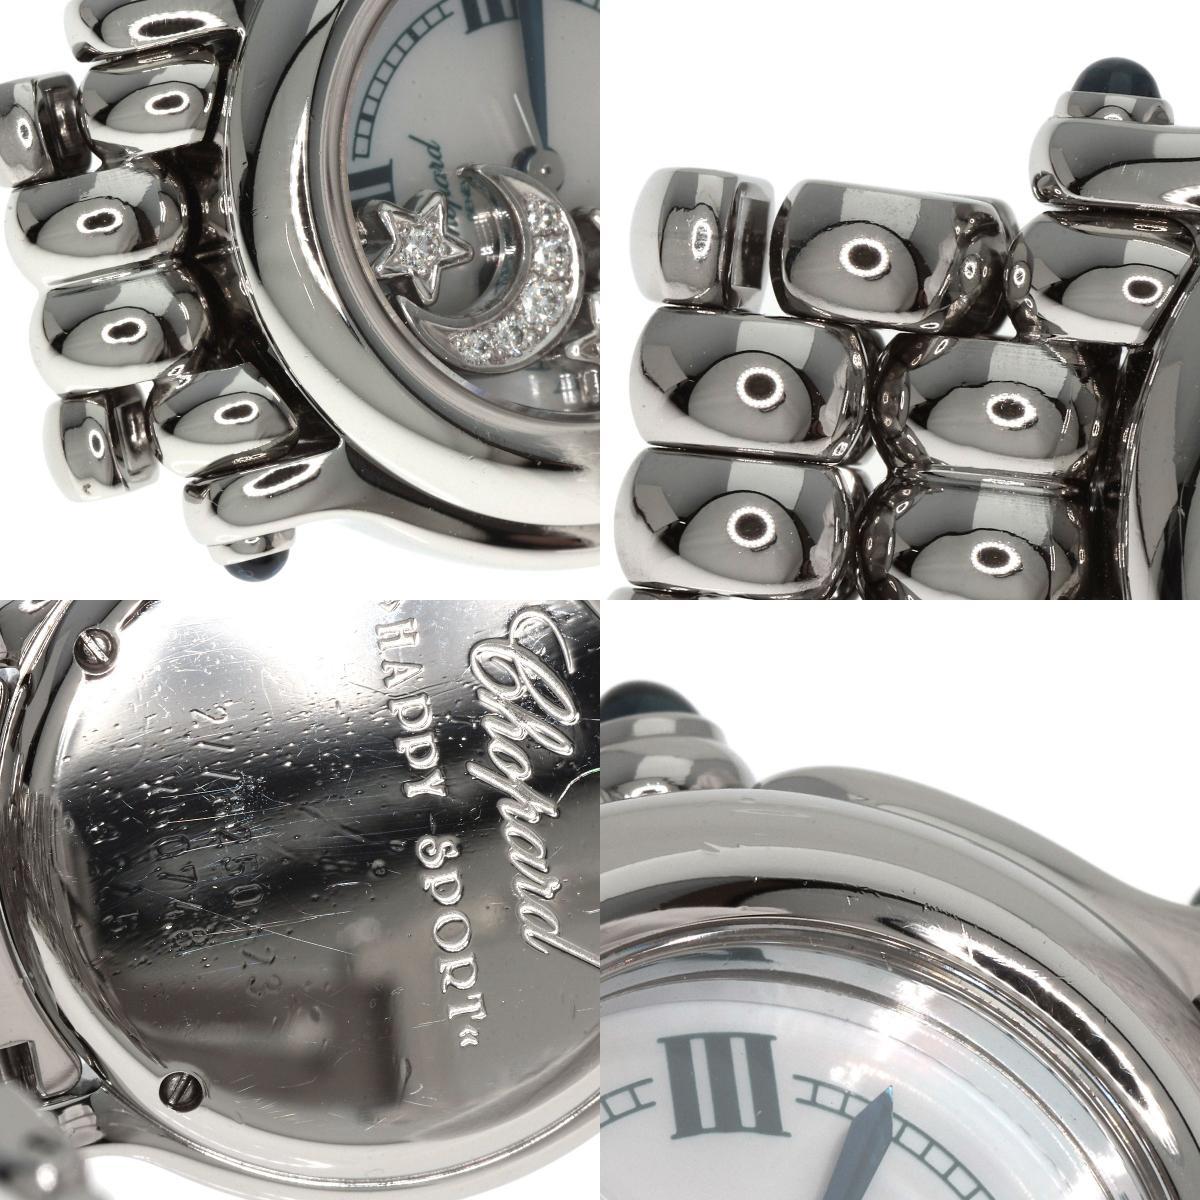 Chopard Chopard 27/8250-23 happy спорт бриллиант наручные часы нержавеющая сталь SS женский б/у 